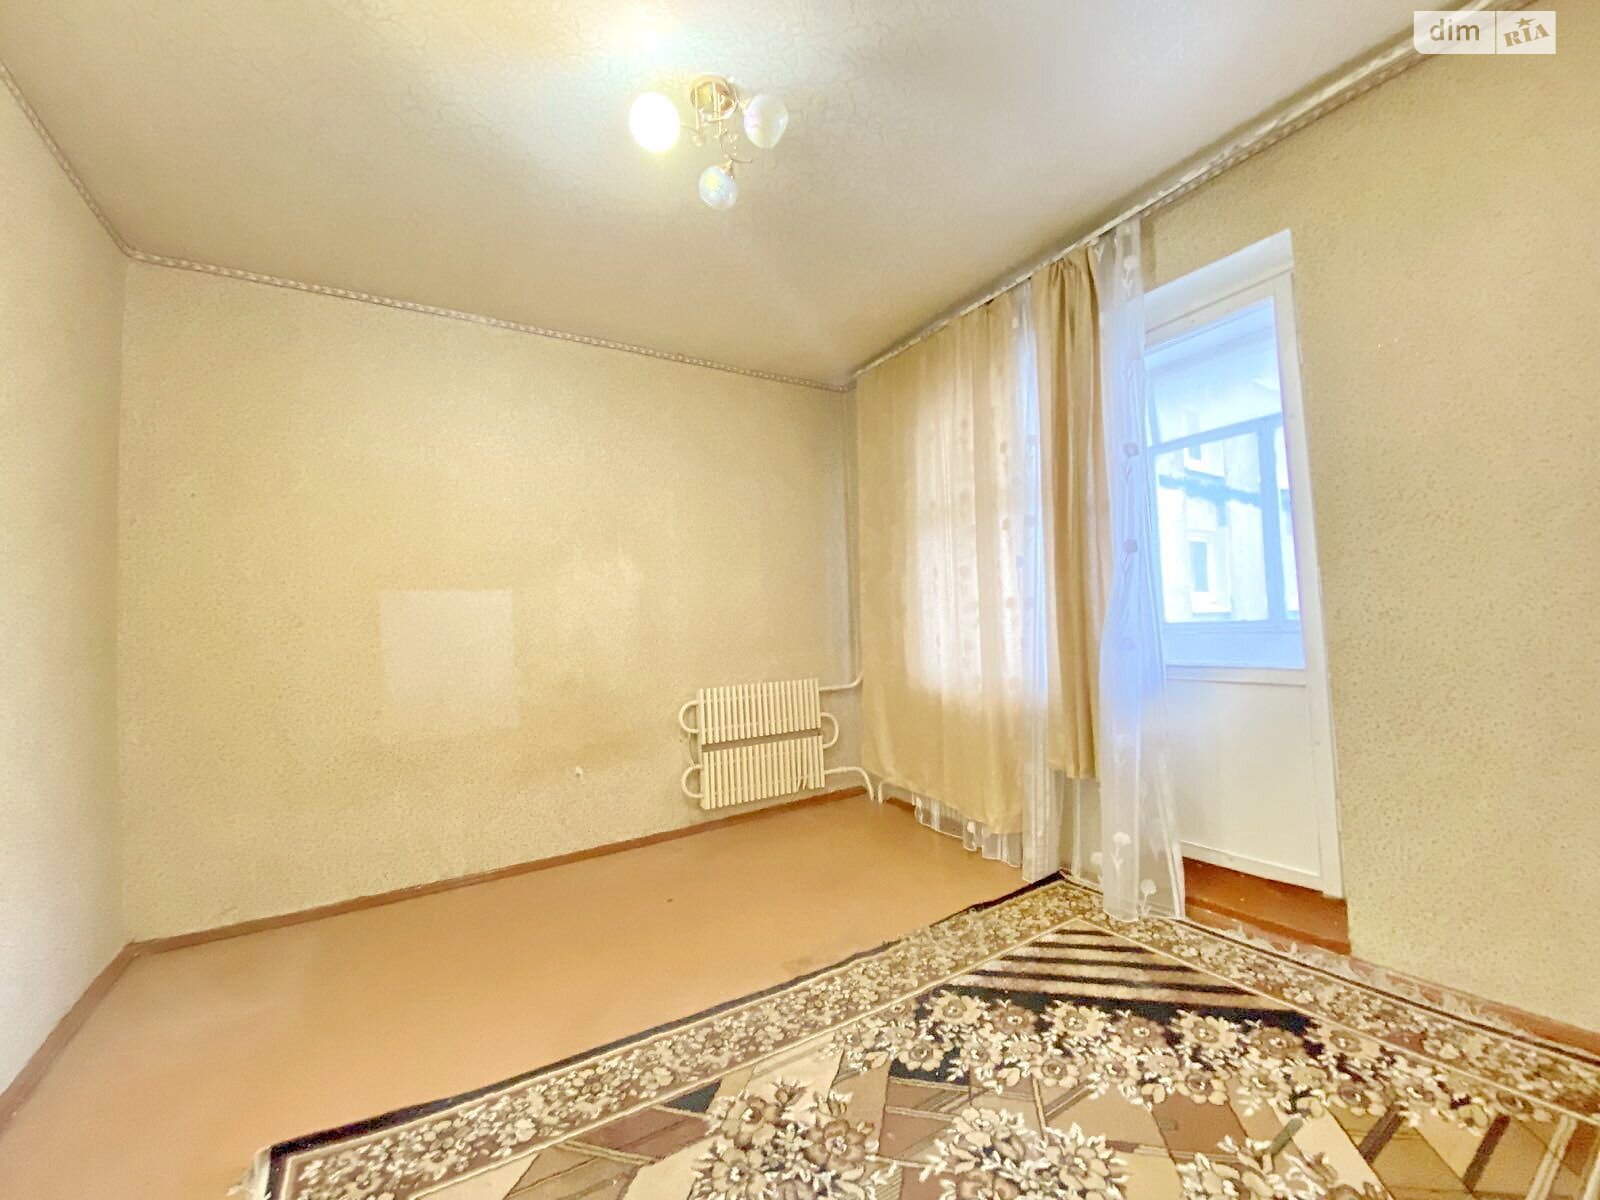 Продажа трехкомнатной квартиры в Николаеве, на ул. Крылова 54, район Лески фото 1